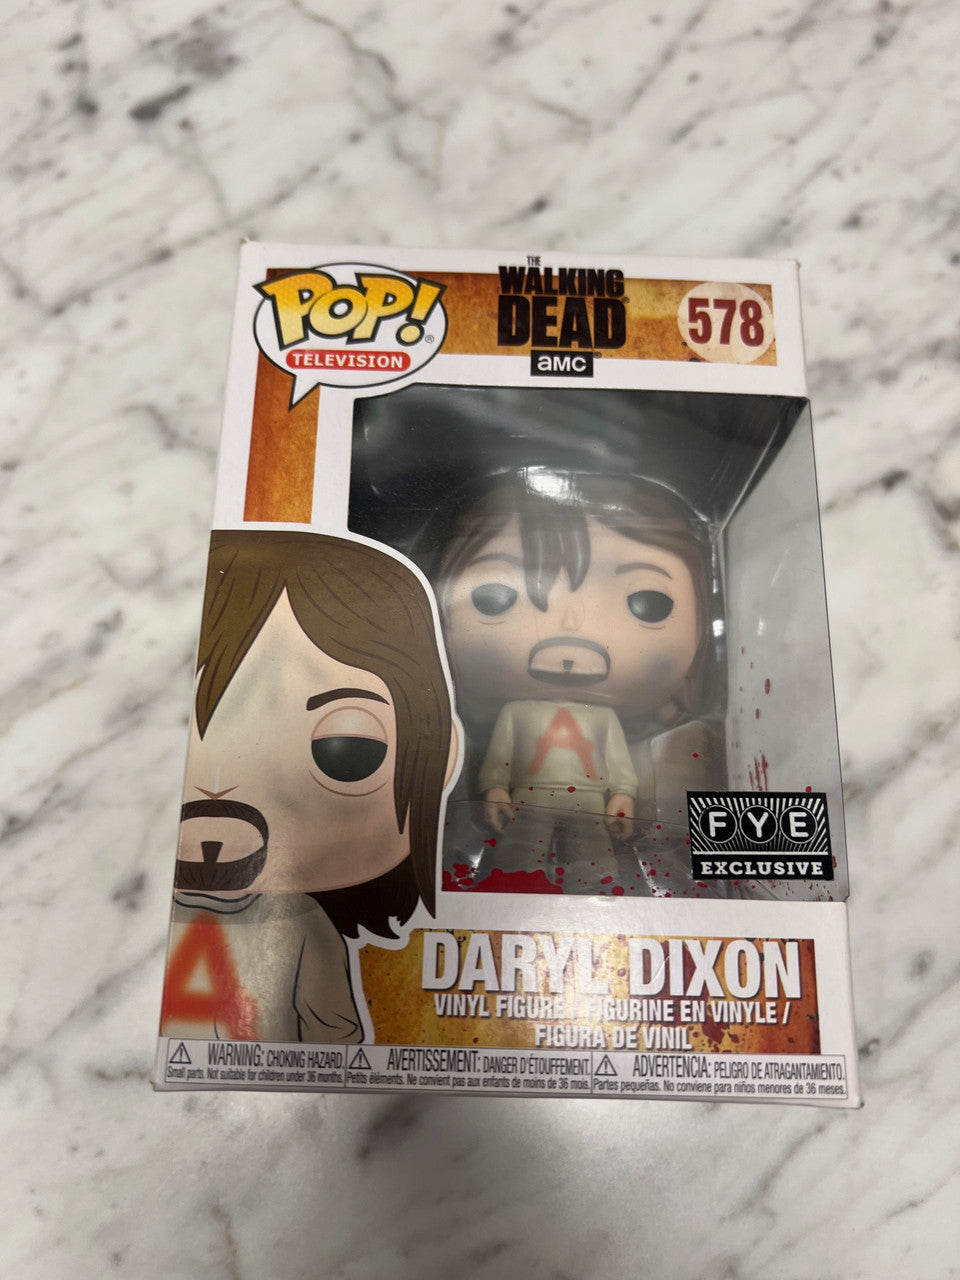 Daryl Dixon The Walking Dead FYE exclusive Funko Pop figure 578